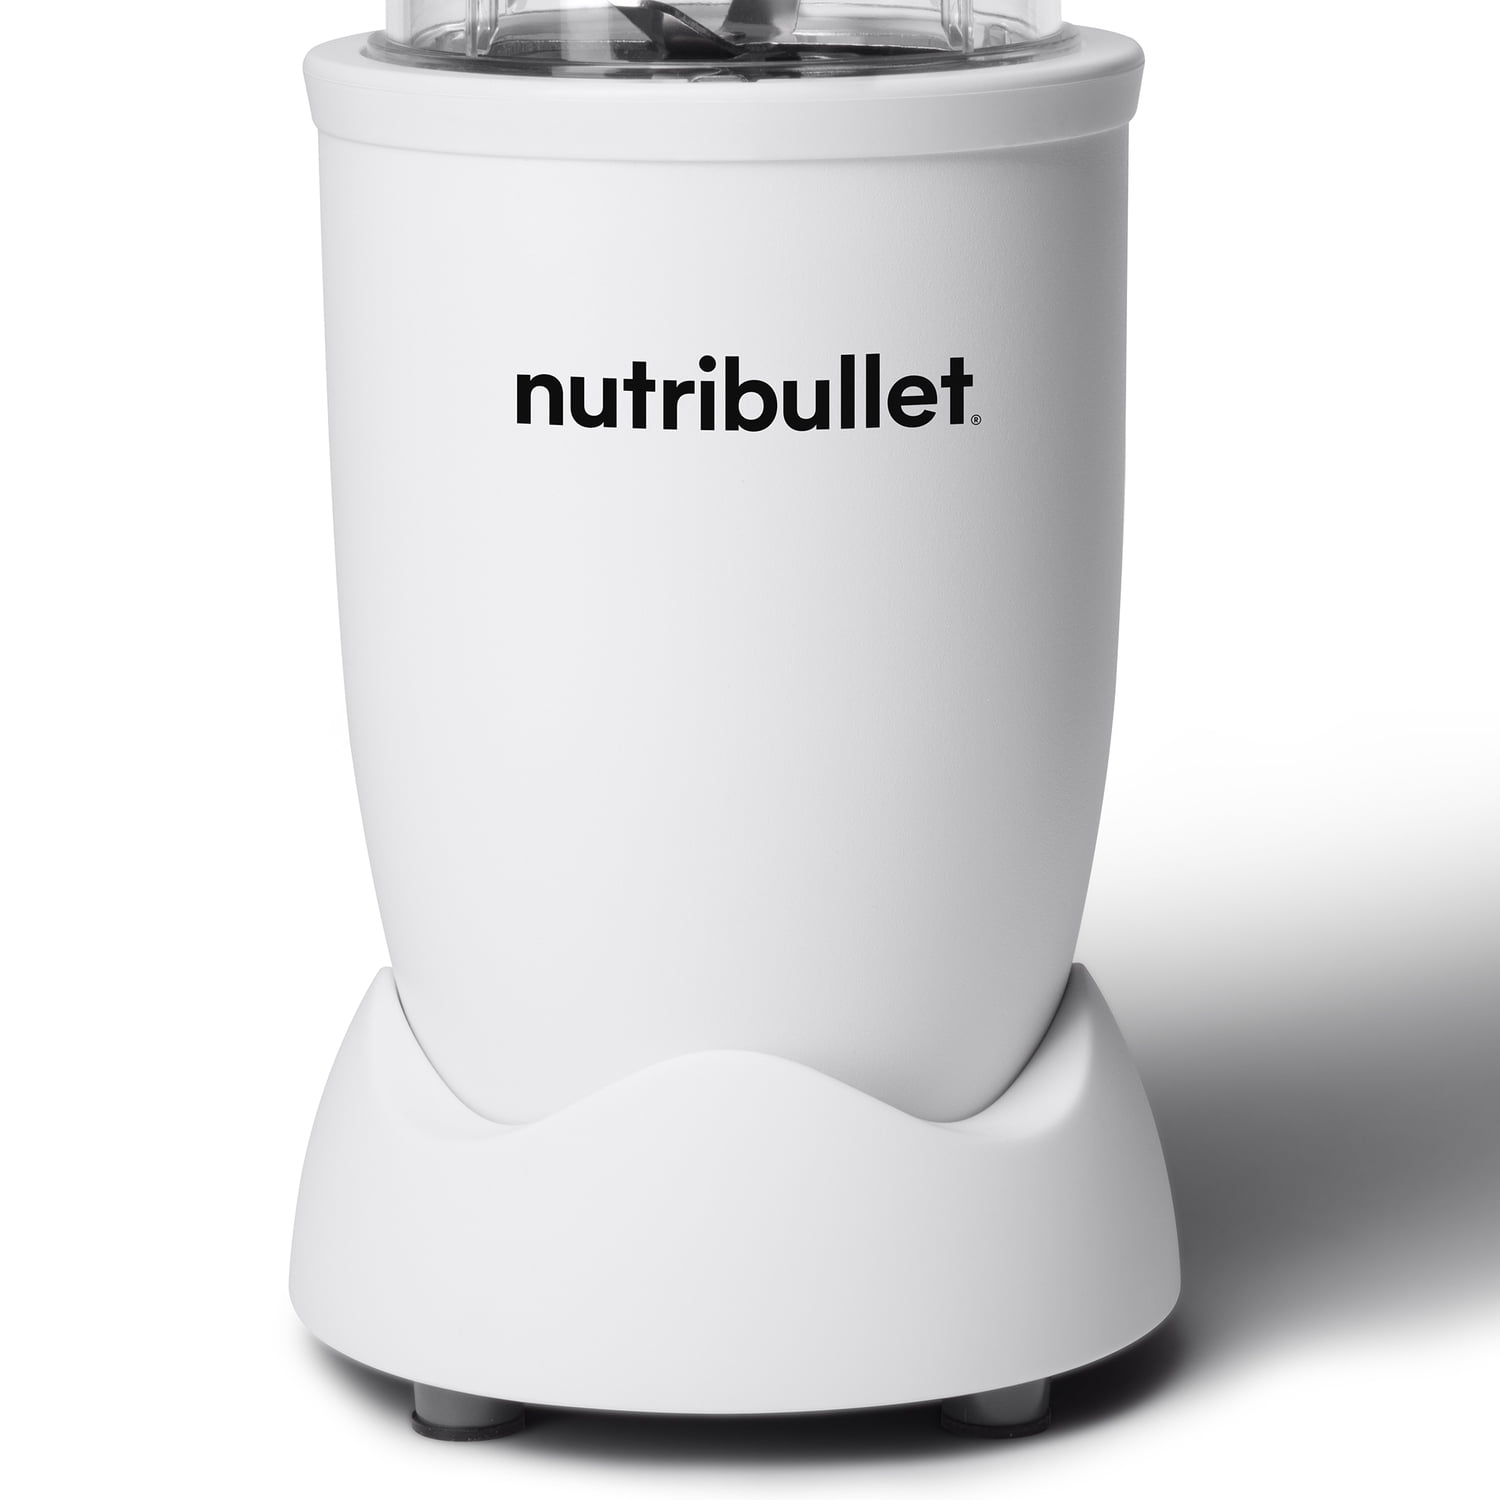 NutriBullet Pro 900 Series debuts five trendy new colors - Reviewed